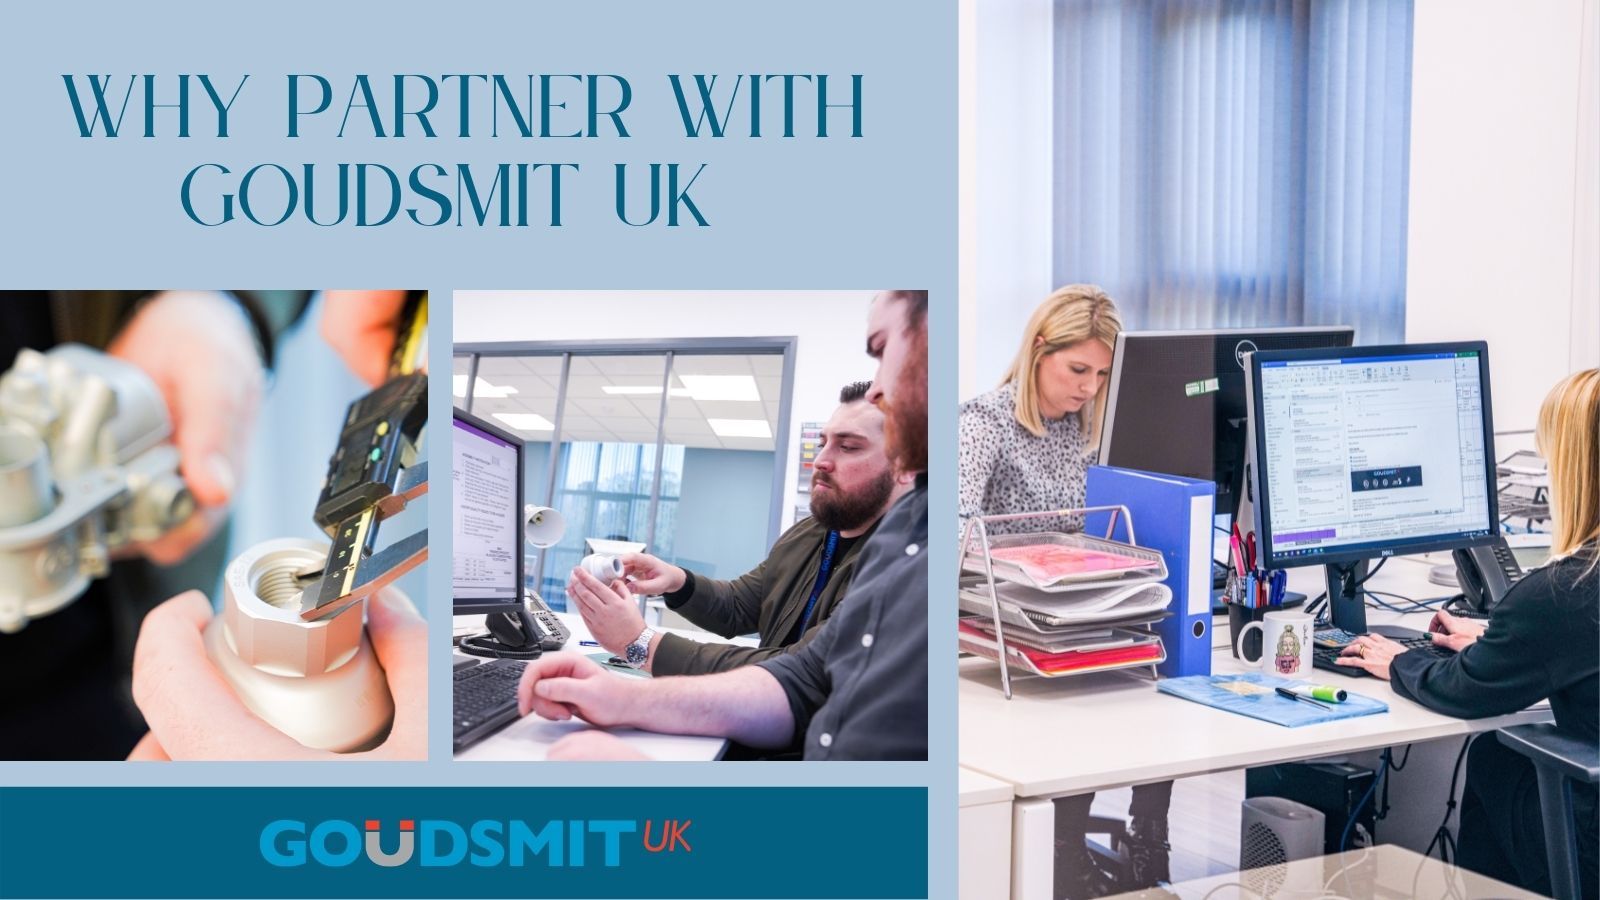 Partner with Goudsmit UK